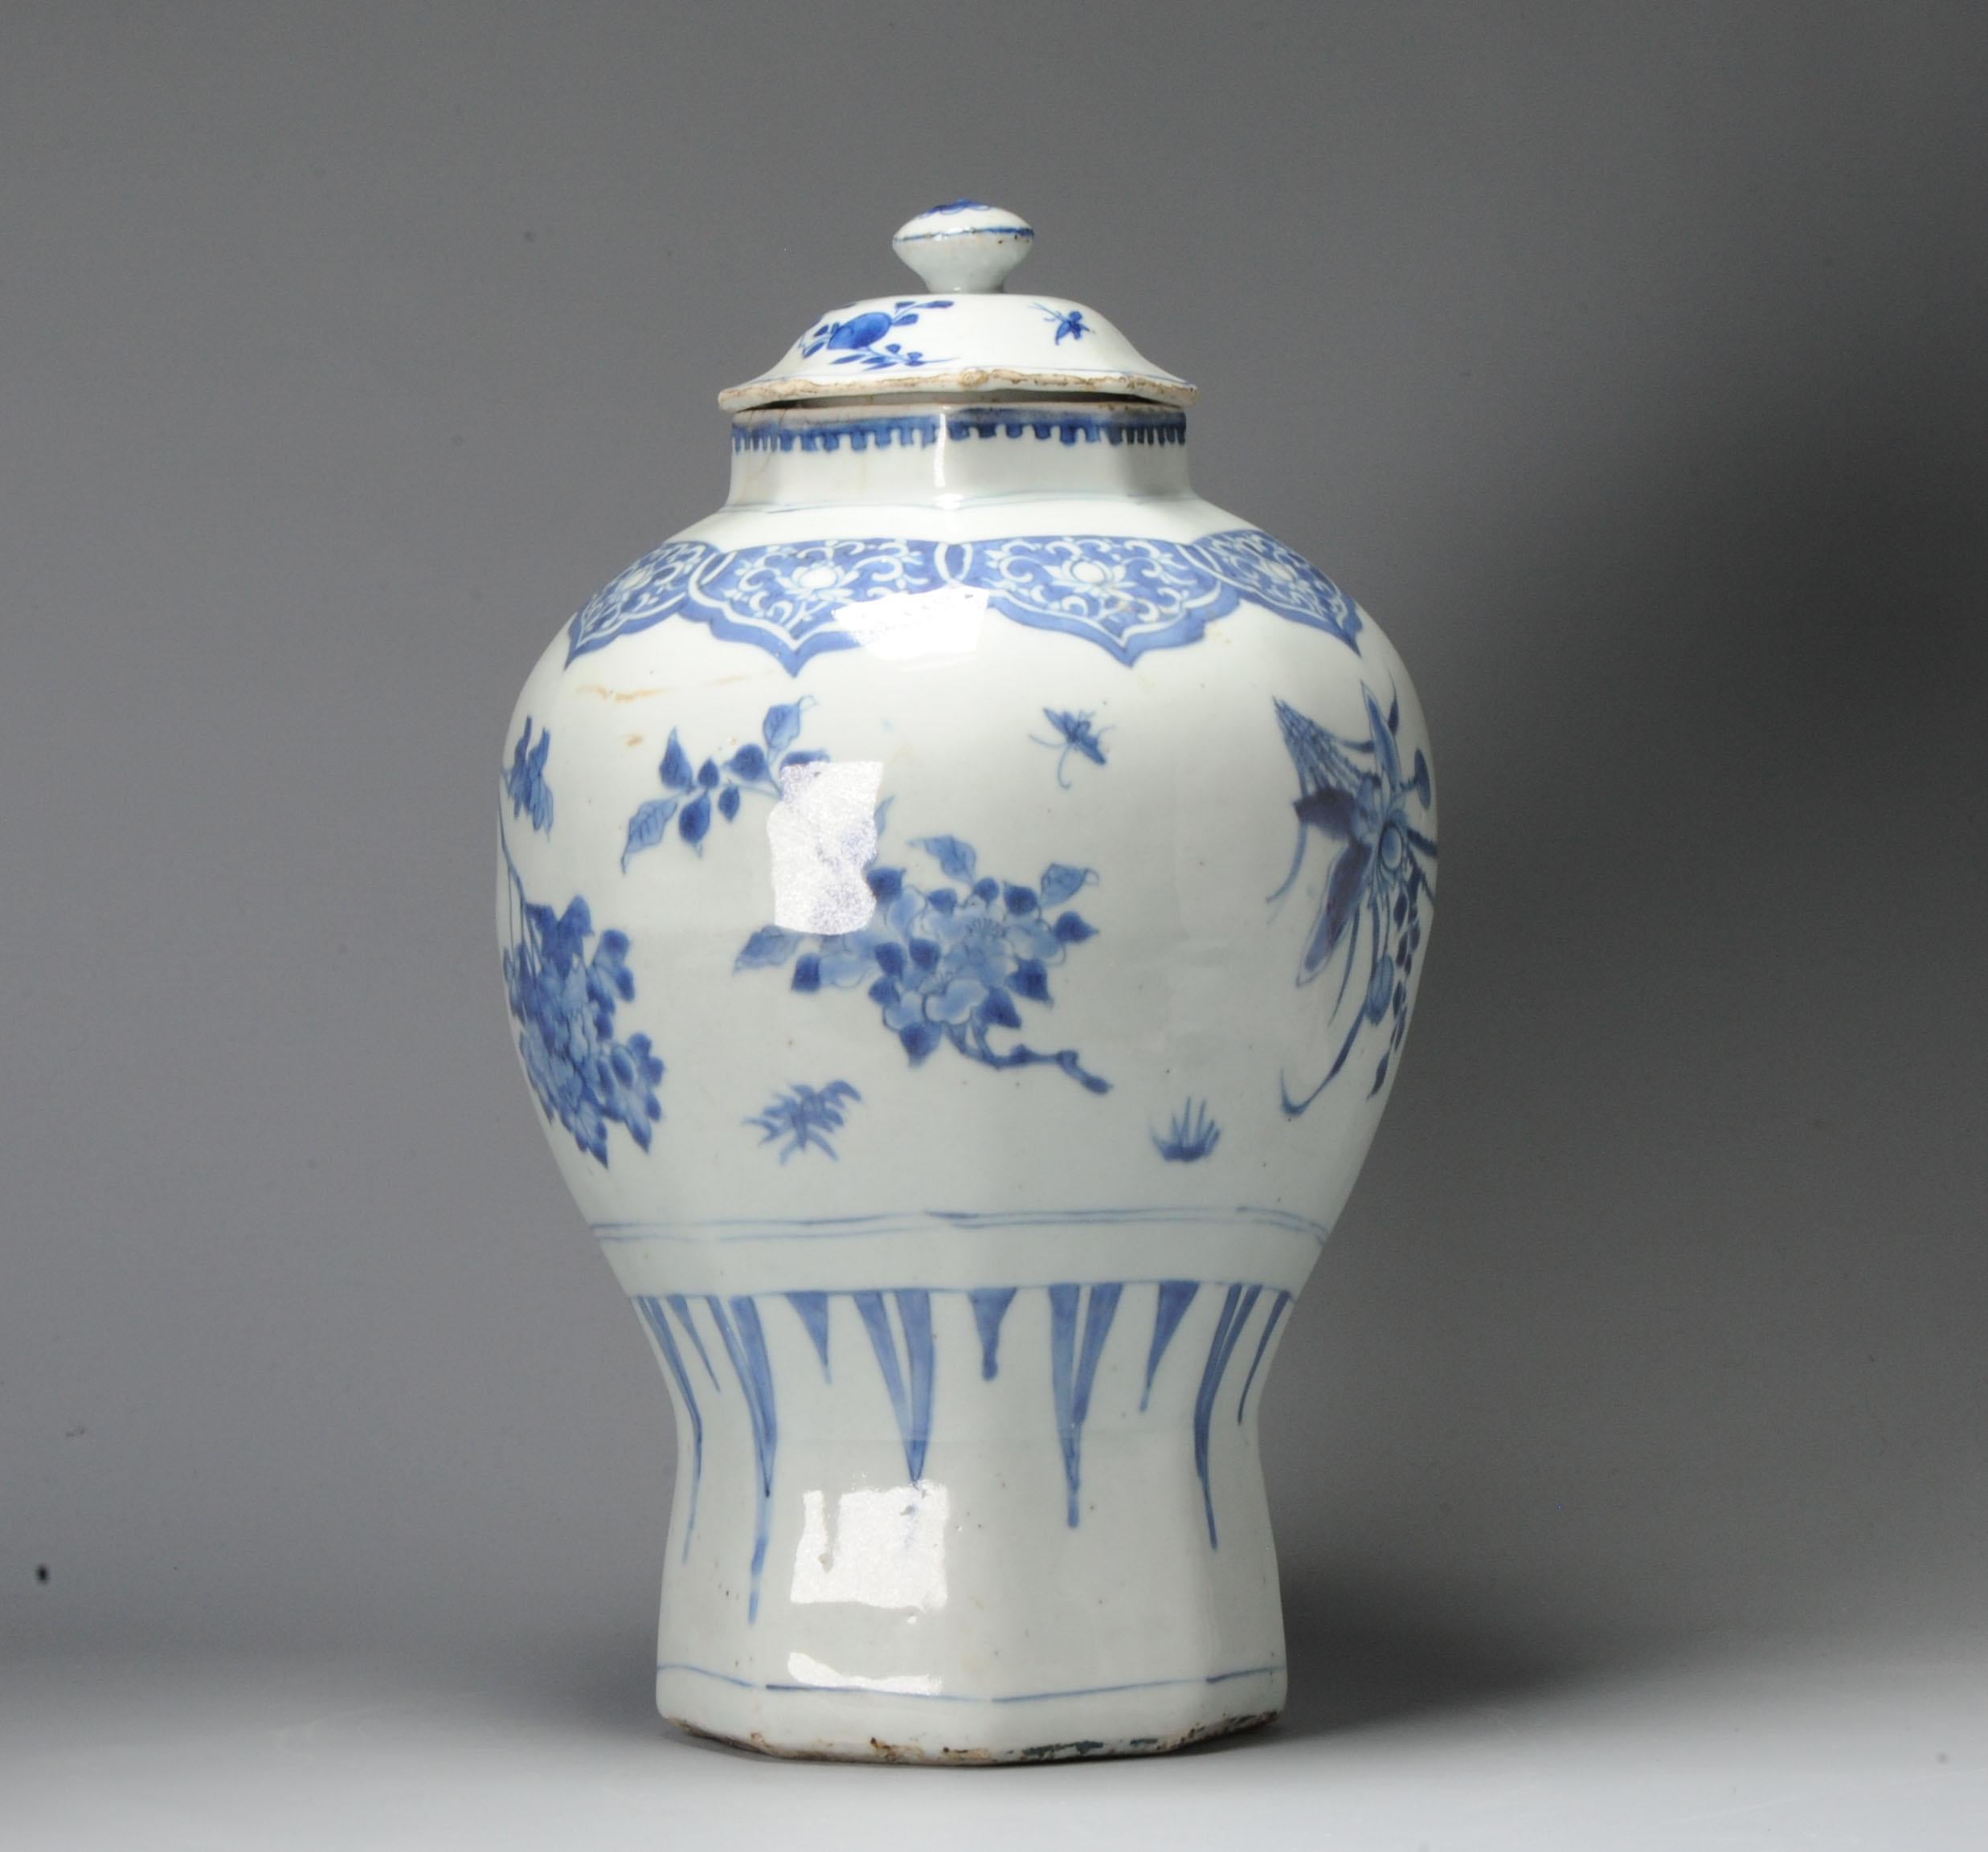 Rare Antique 17th C Transitional Chinese Porcelain Lidded Vase / Jar China For Sale 5